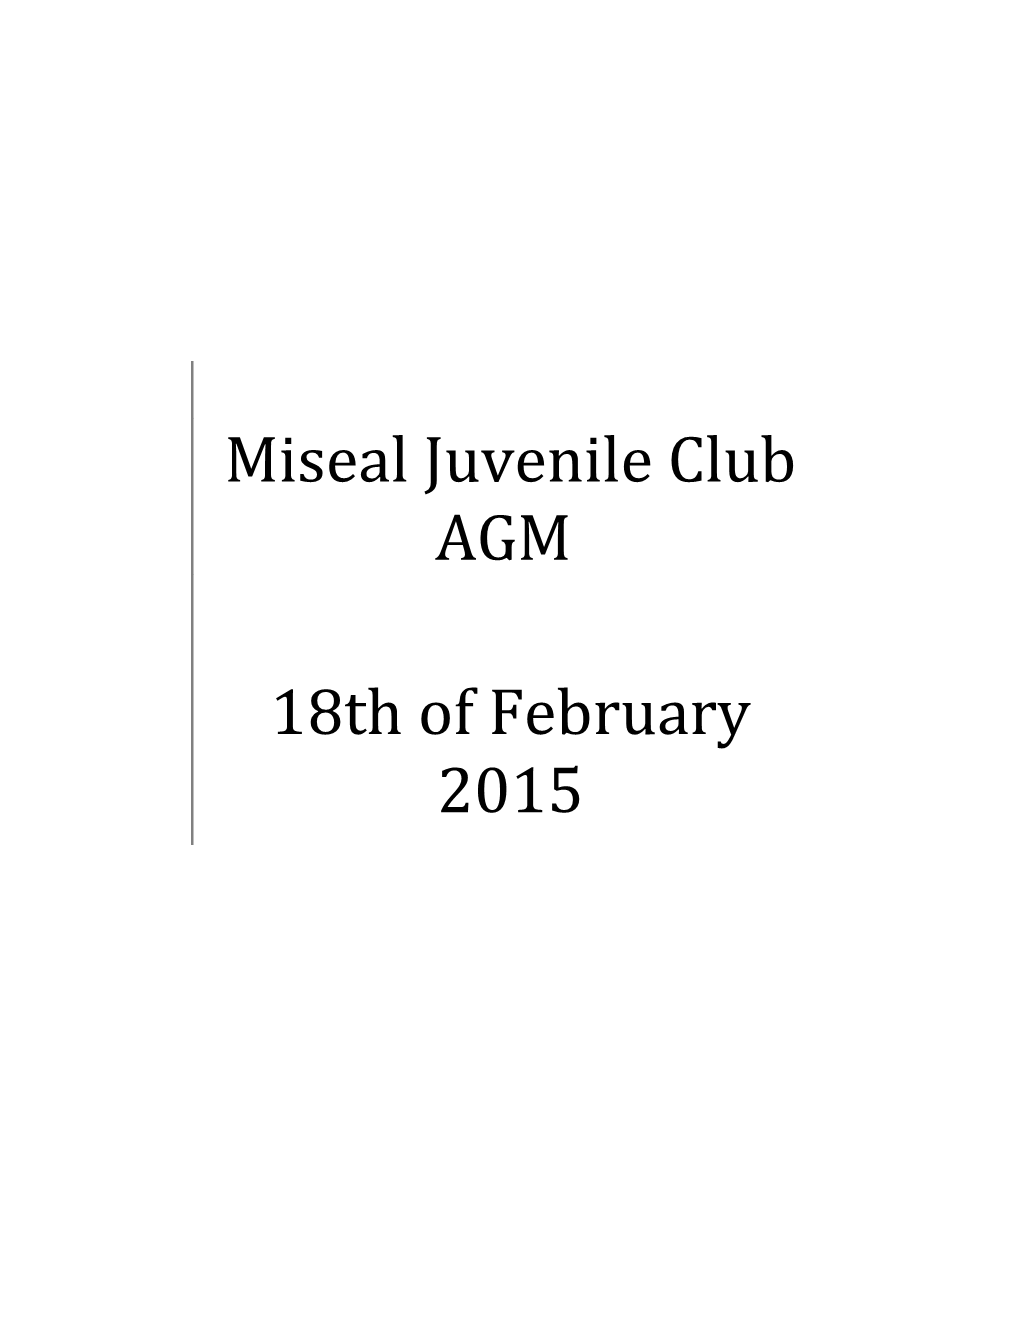 Miseal Juvenile Club AGM